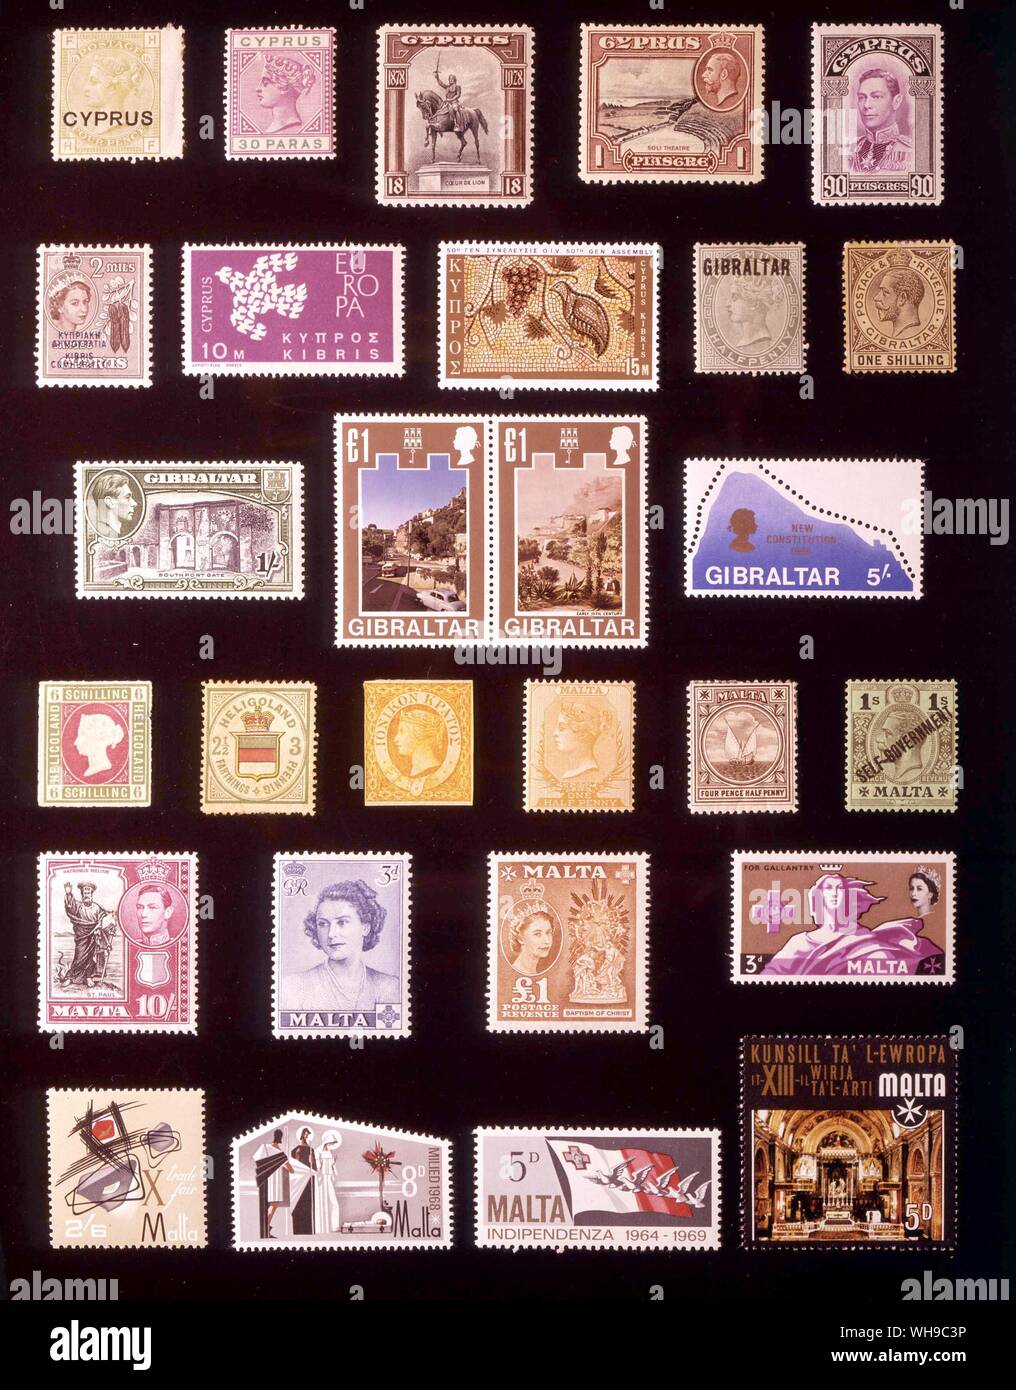 EUROPE - BRITISH EUROPE: (left to right) 1. Cyprus, 4 pence, 1880, 2. Cyprus, 30 paras, 1894, 3. Cyprus, 18 piastres, 1928, 4. Cyprus, 1 piastre, 1934, 5. Cyprus, 90 piastres, 1938, 6. Cyprus, 2 mills, 1960, 7. Cyprus, 10 mils, 1962, 8. Cyprus, 15 mils, 1970, 9. Gibraltar, halfpenny, 1886, 10. Gibraltar, 1 shilling, 1932, 11. Gibraltar, 1 shilling, 1938, 12. Gibraltar, 1 pound + 1 pound, 1971, 13. Gibraltar, 5 shillings, 1969, 14. Heligoland, 6 schillings, 1867, 15. Heligoland, 3 pfennigs, 1876, 16. Ionian Islands, orange (halfpenny), 1859, 17. Malta, halfpenny, 1860, 18. Malta, 4.5 pence, Stock Photo